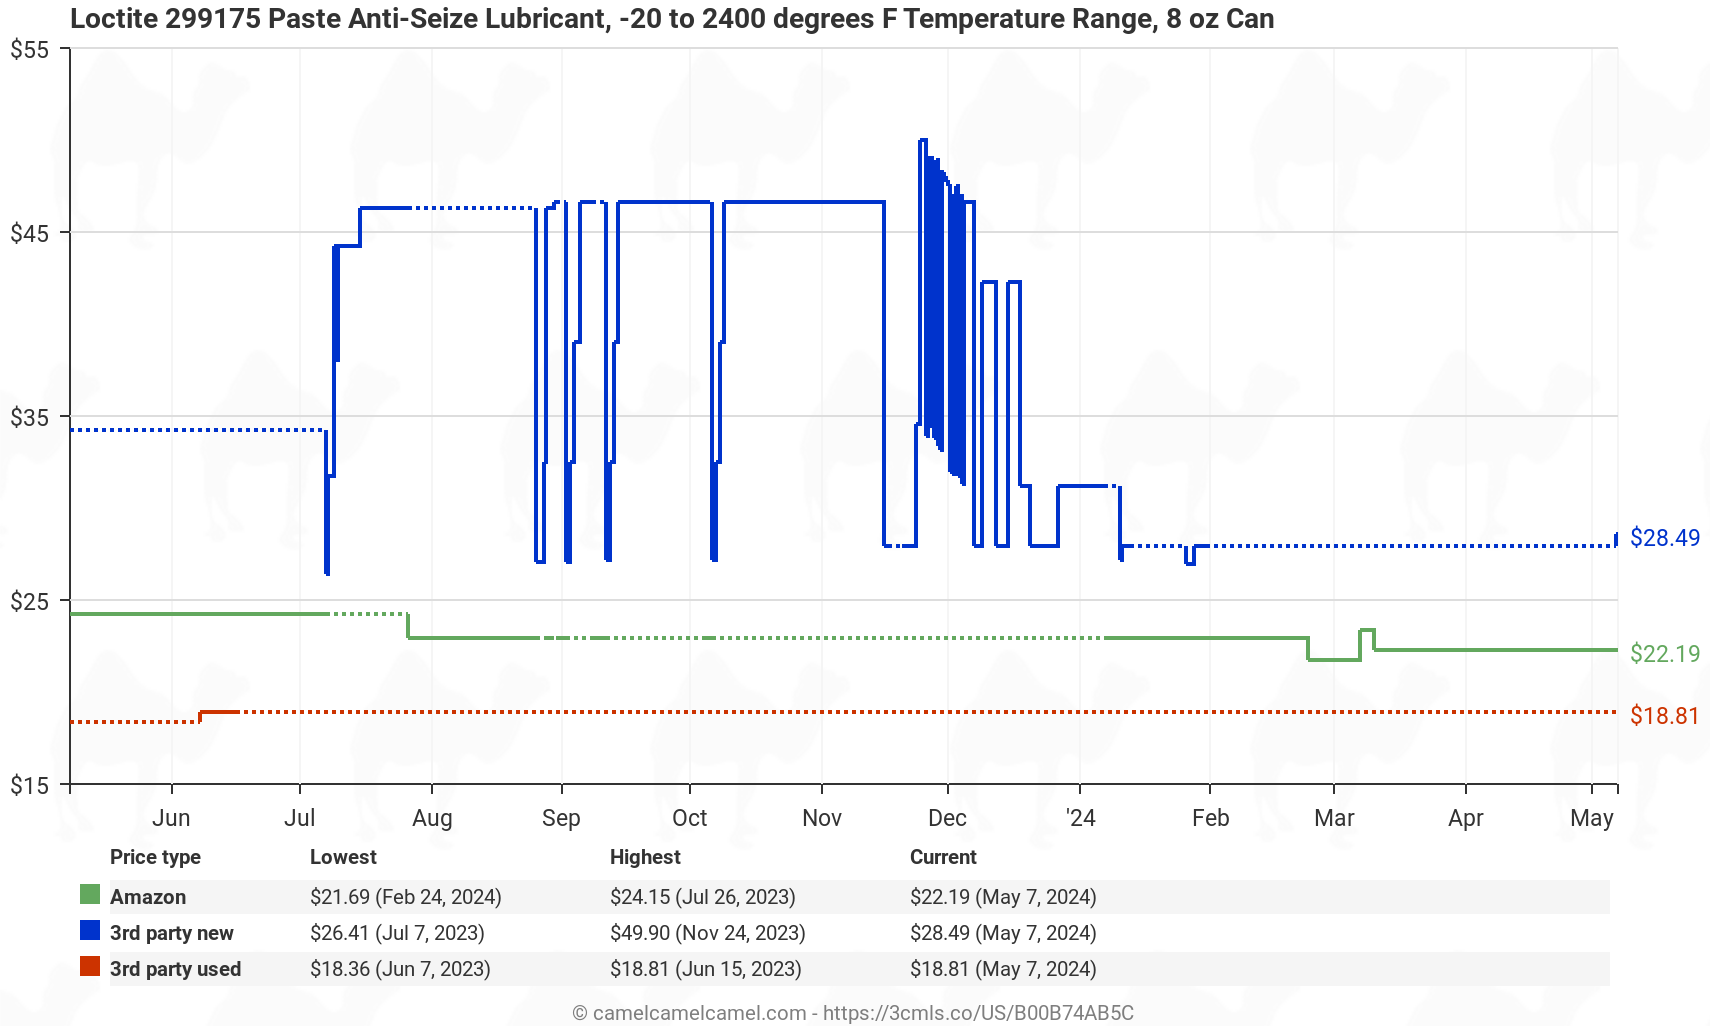 Loctite 299175 Paste Anti-Seize Lubricant, -20 to 2400 degrees F Temperature Range, 8 oz Can - Price History: B00B74AB5C